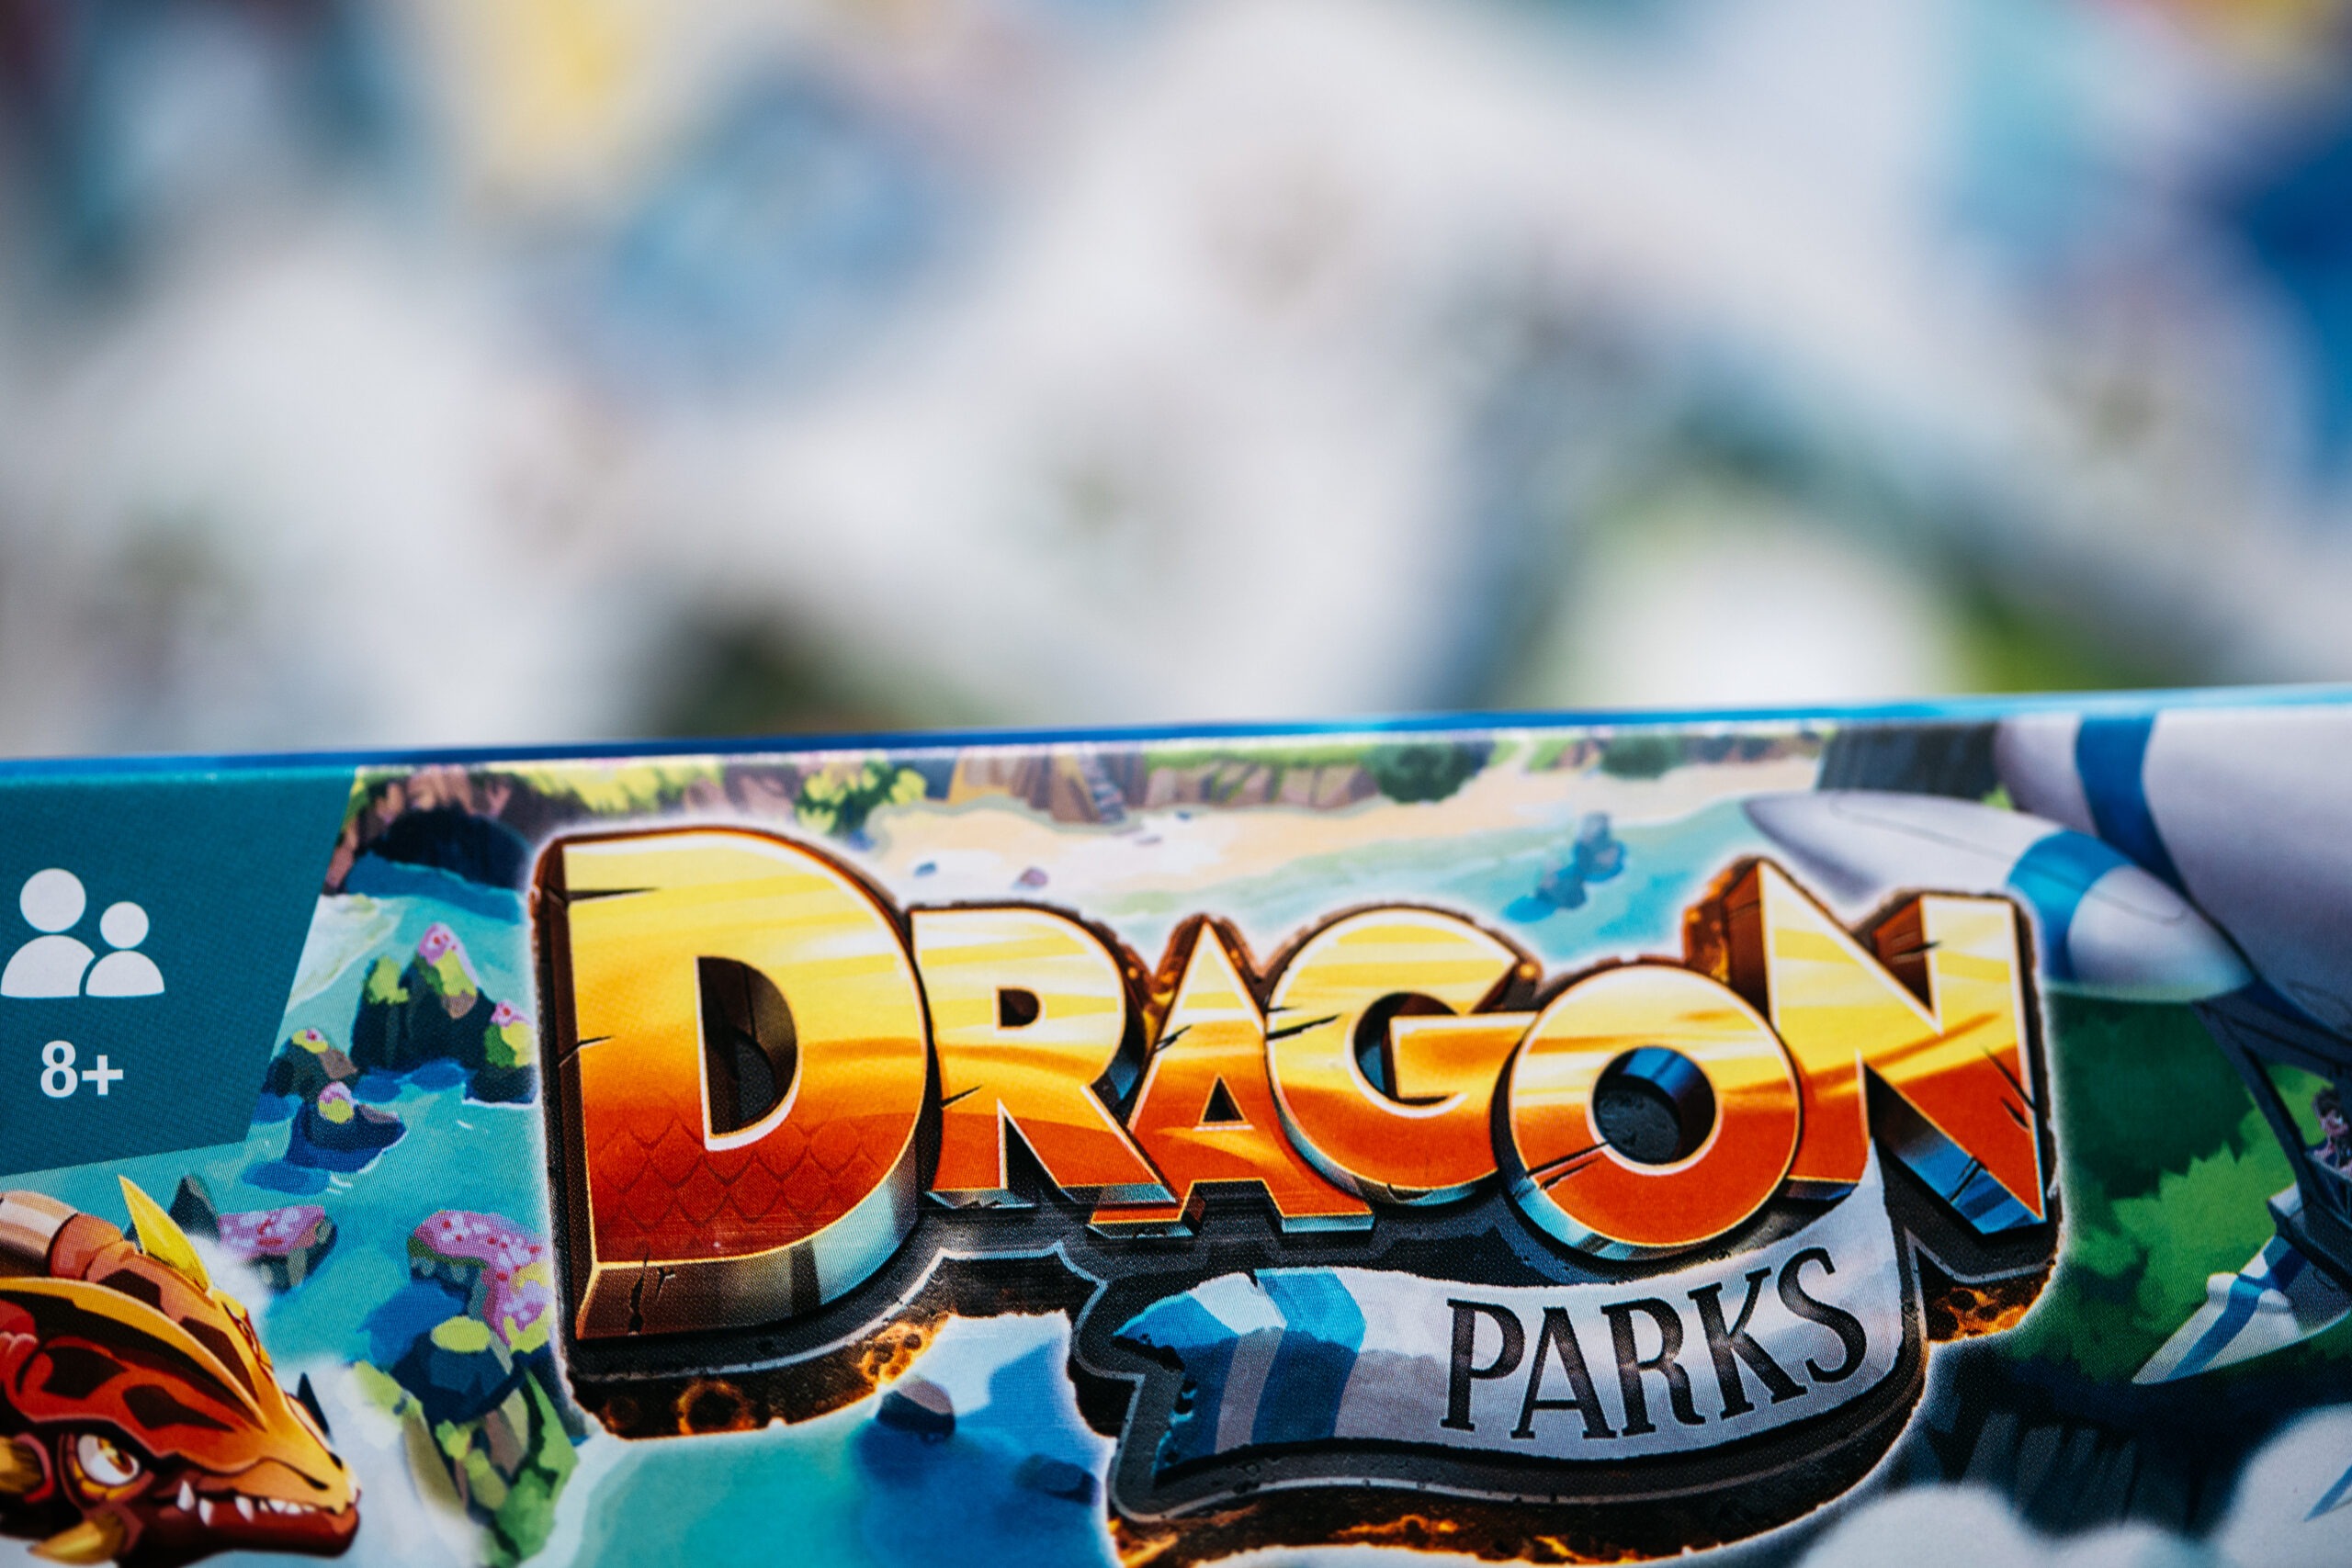 Dragon parks ankama jeu de société